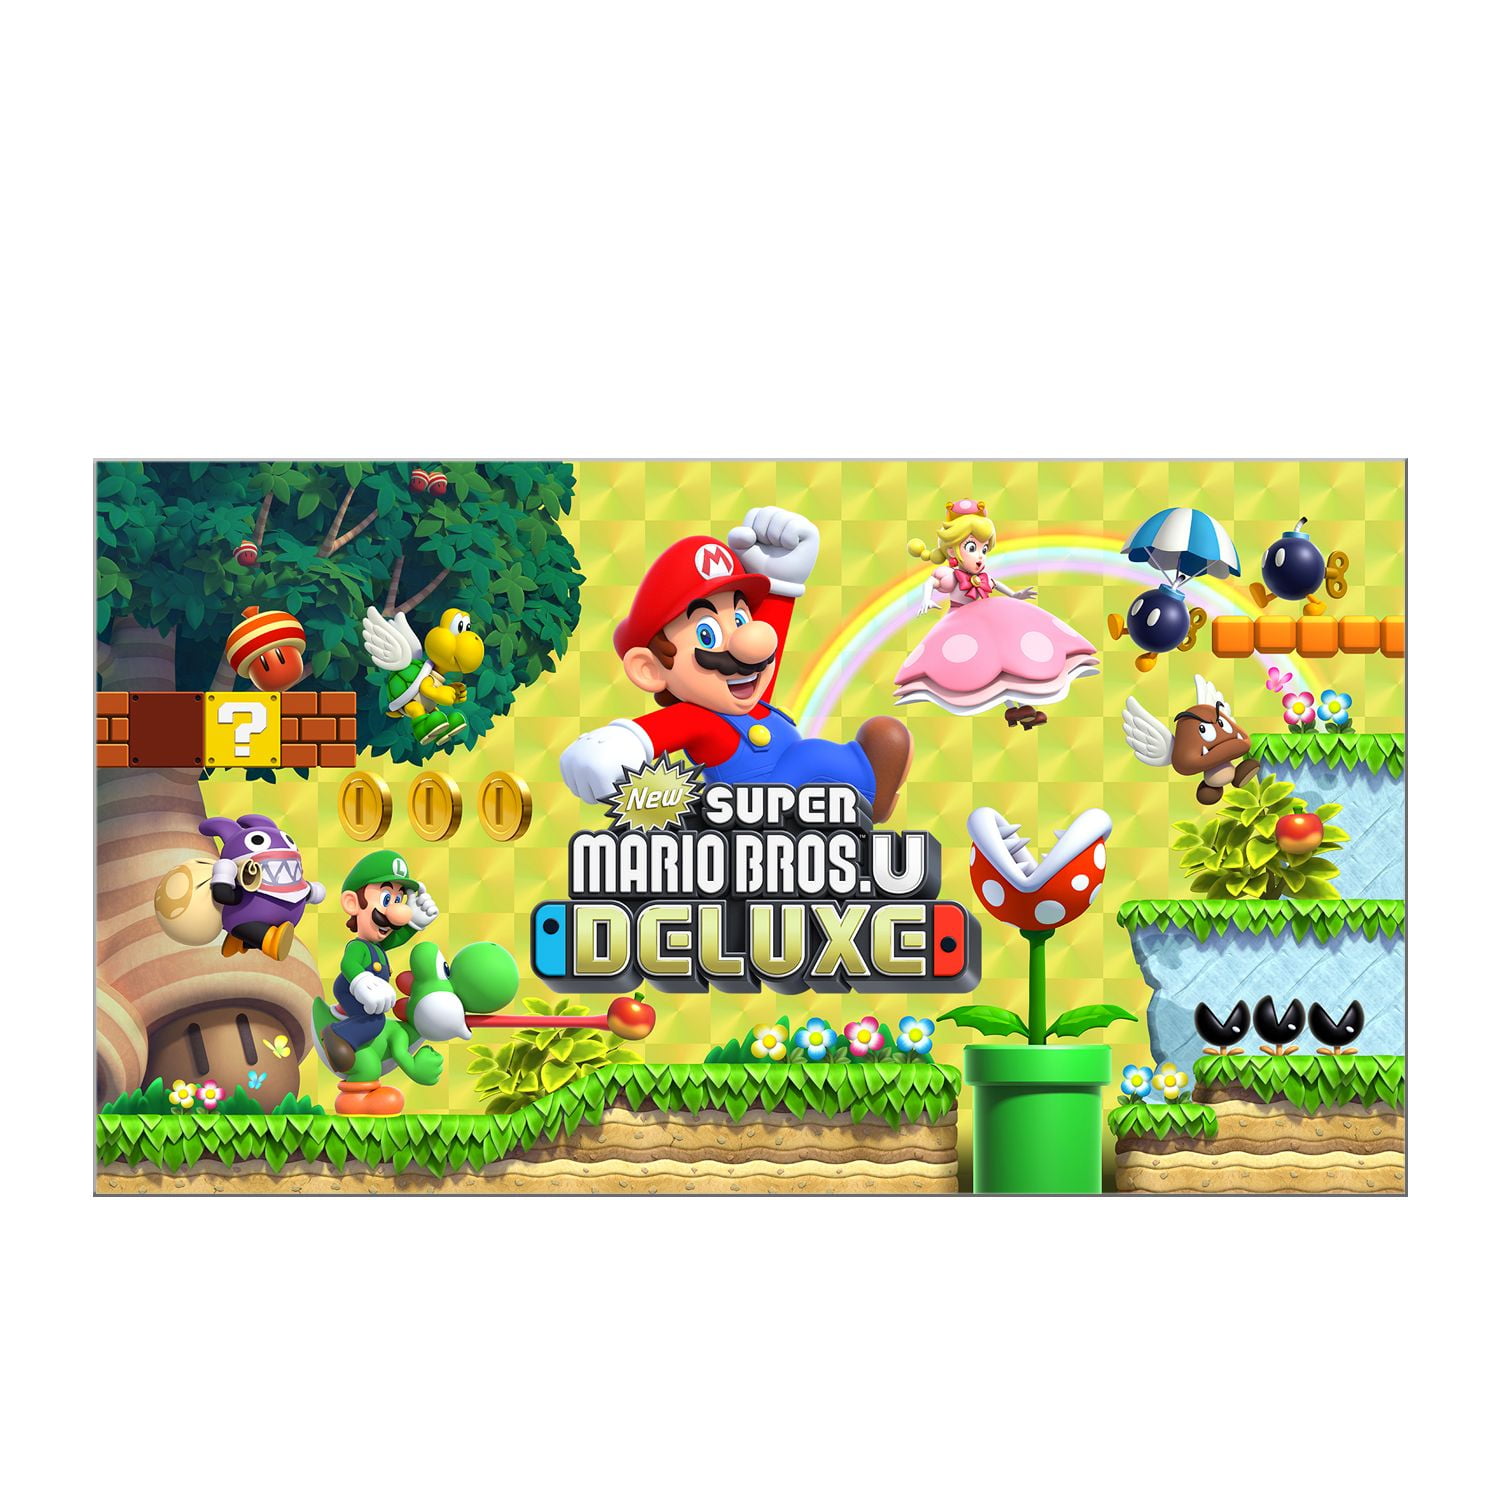 Triatleet De andere dag Fabrikant New Super Mario Bros U Deluxe- Nintendo Switch [Digital] - Walmart.com